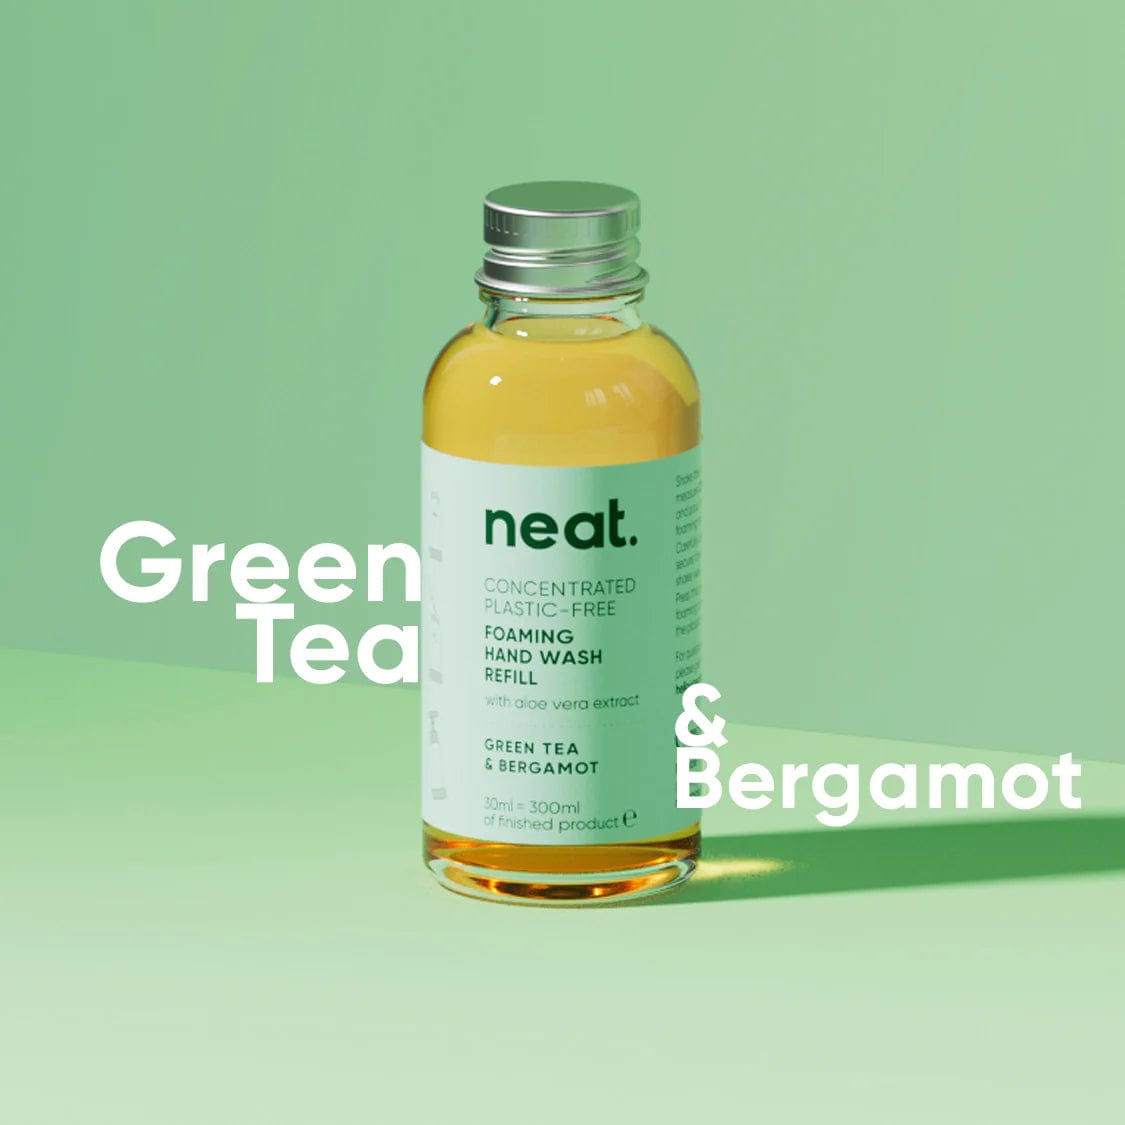 neat. Soap Neat Foaming Handwash Refill Starter Pack - Green Tea & Bergamot